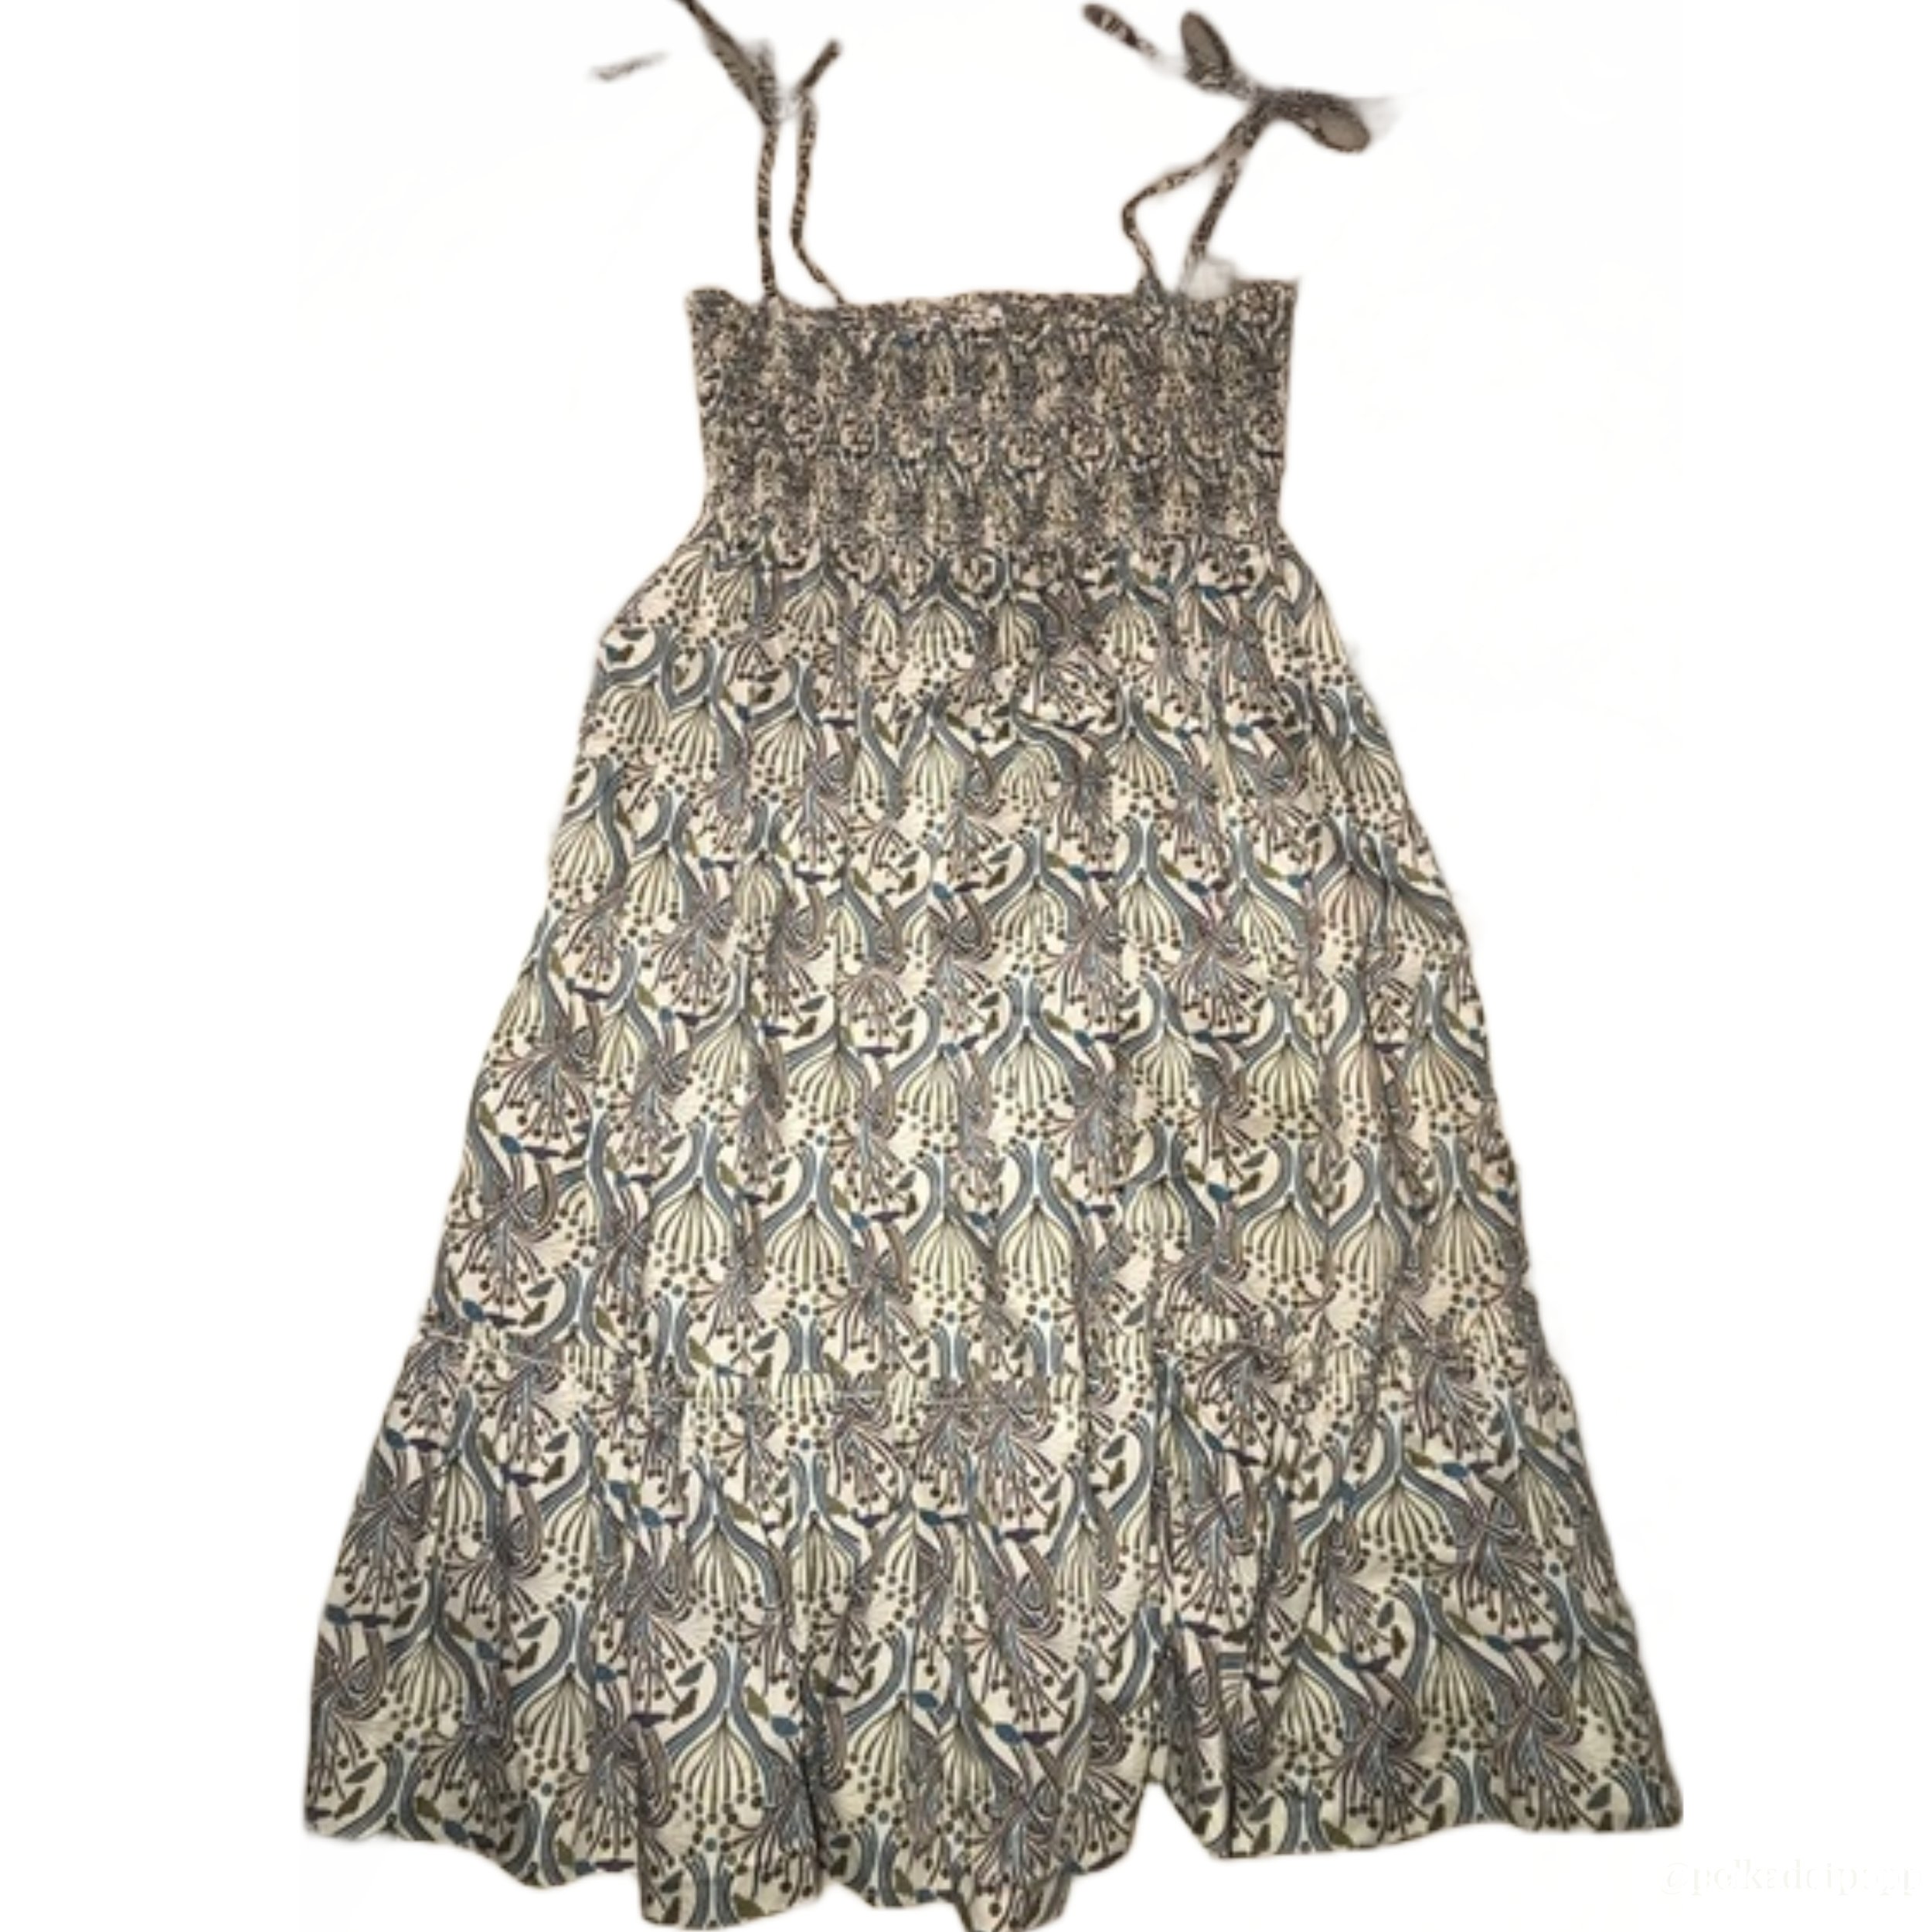 Bonpoint Liberty-Print Smock Dress.jpg